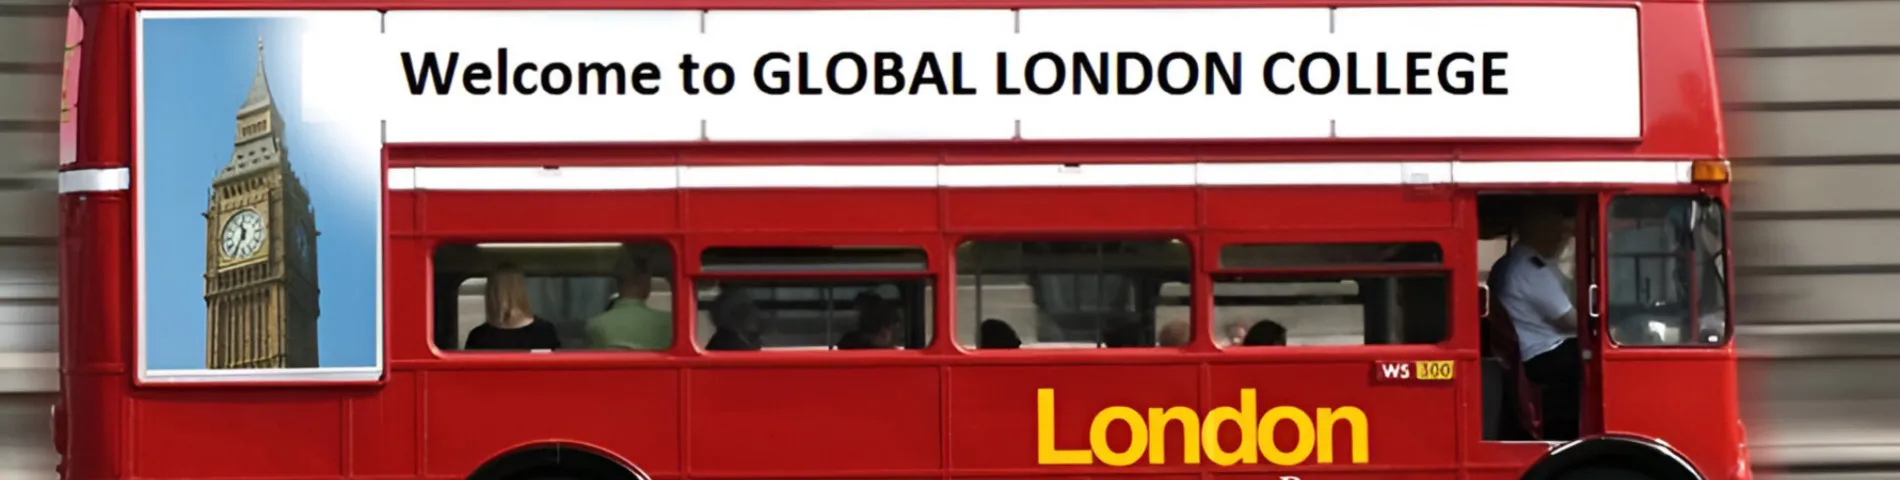 Global London College画像1